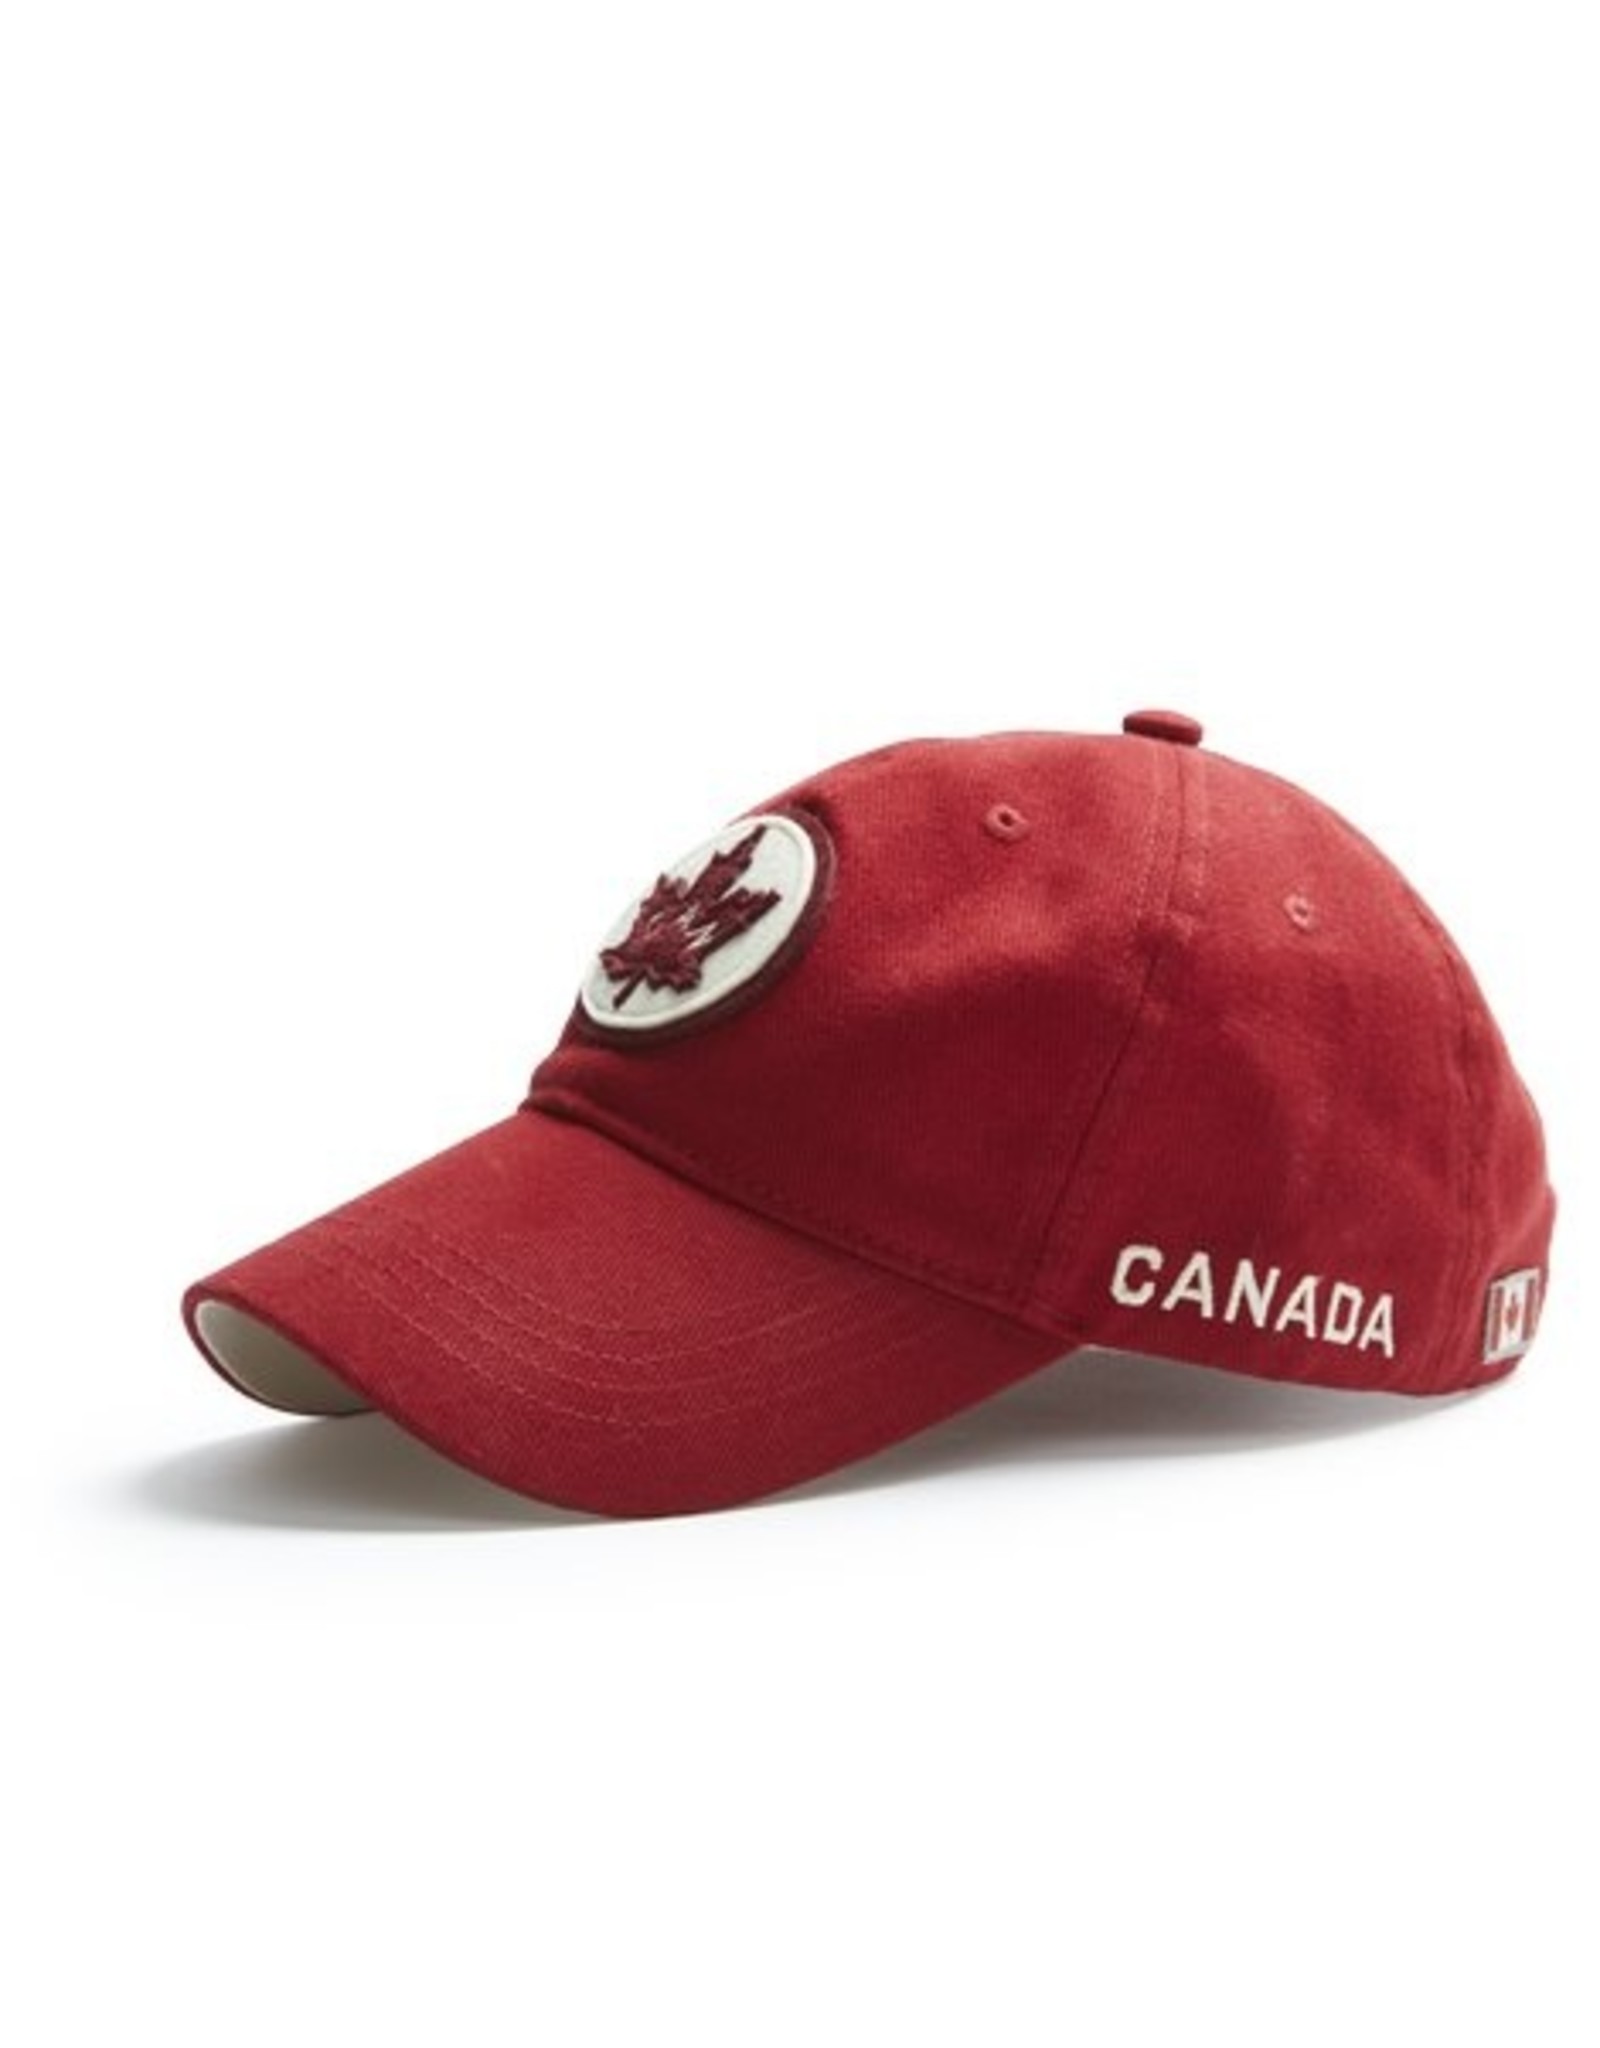 RED CANOE CANADA CAP